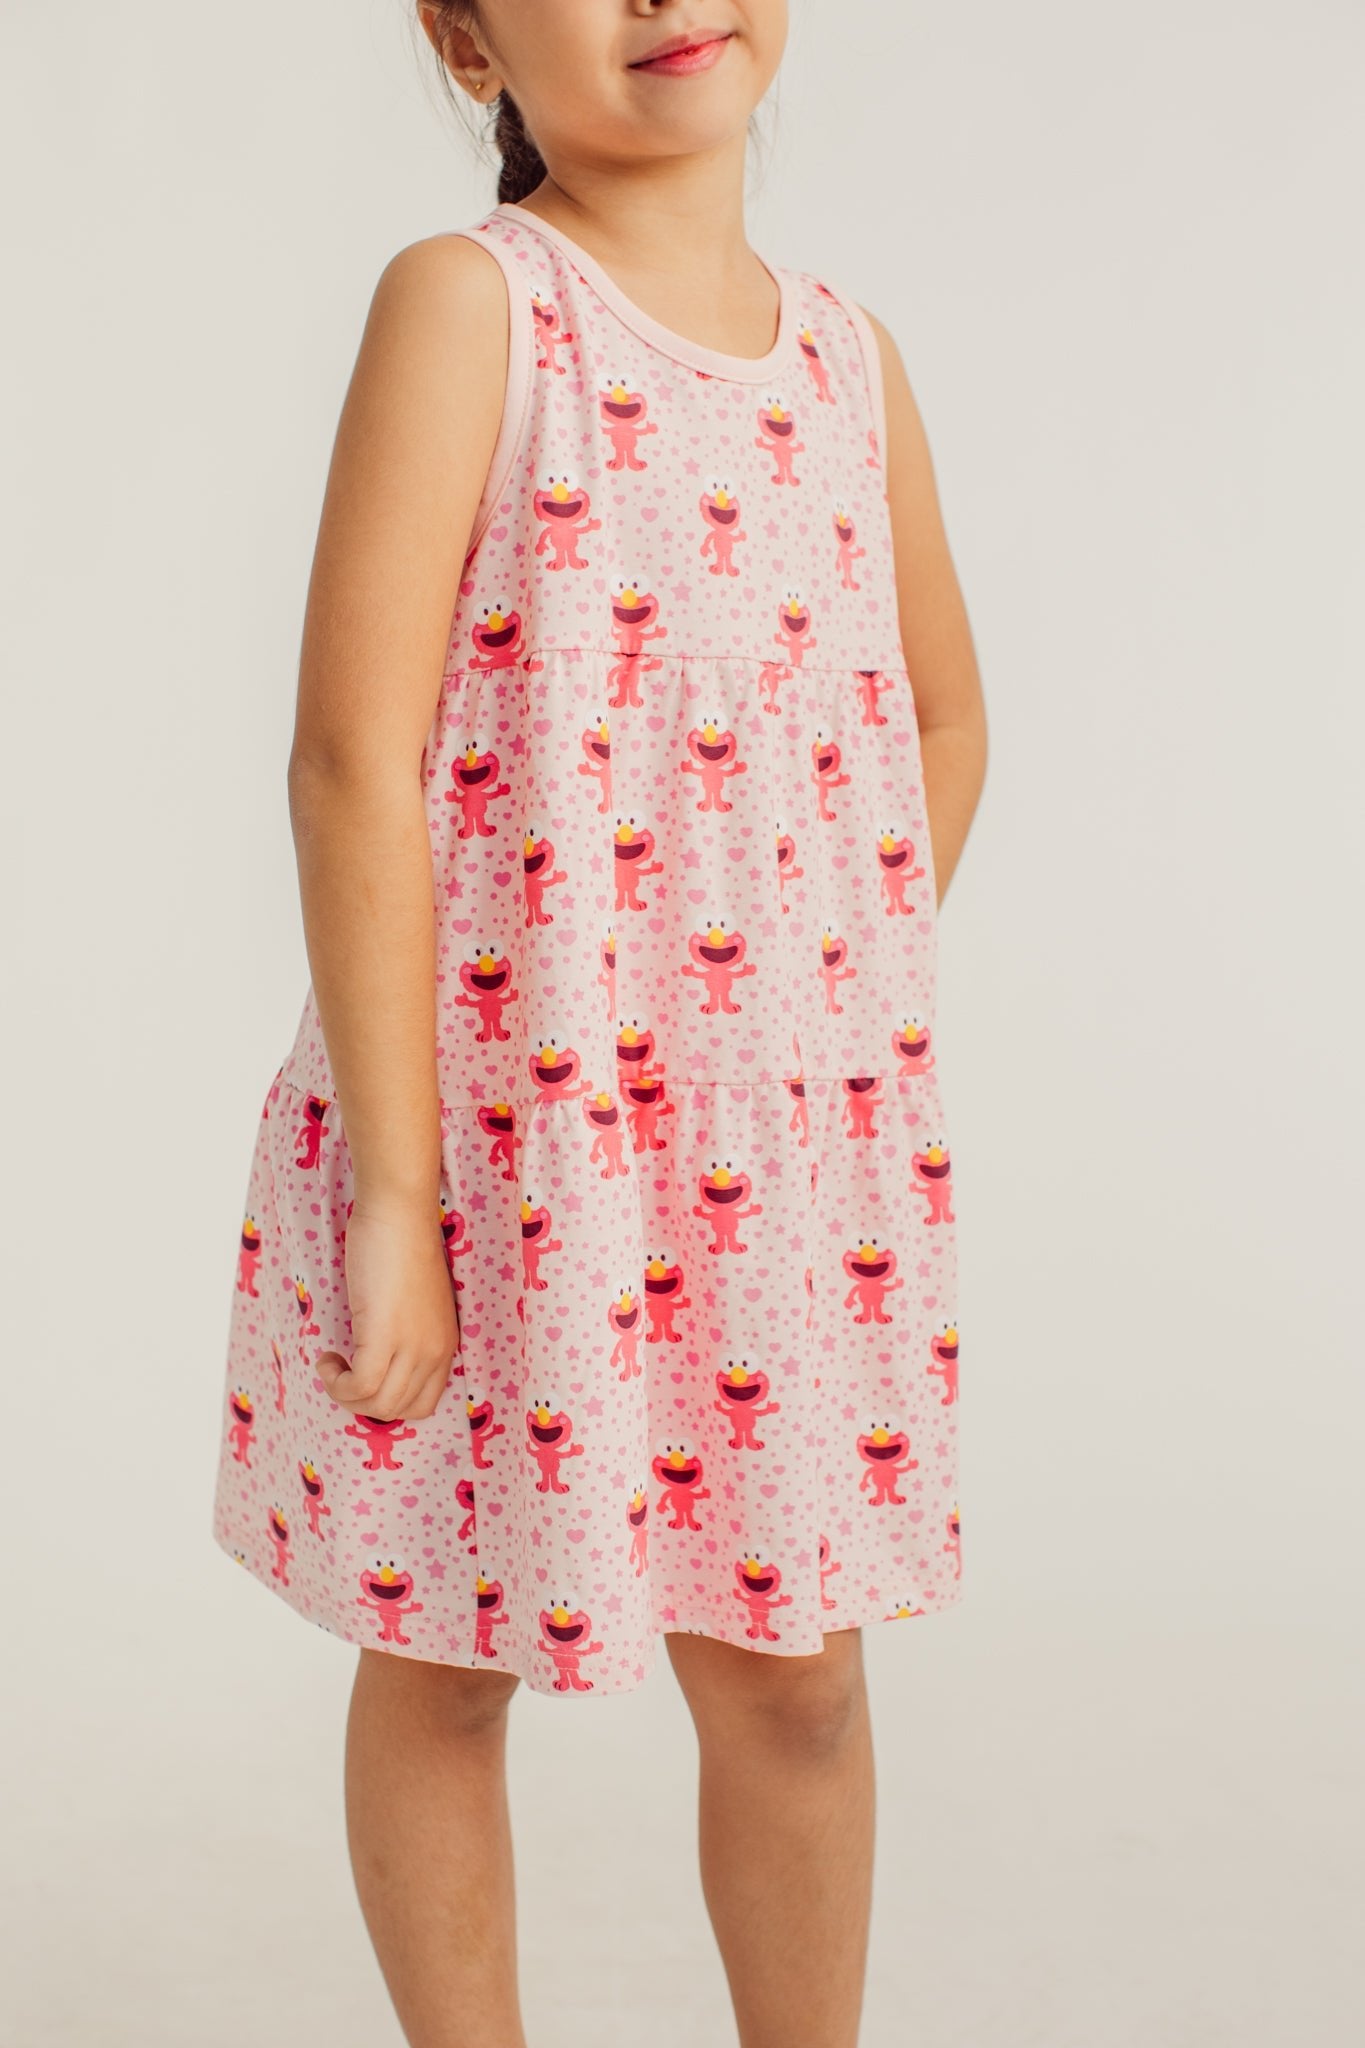 Pink Elmo Patterned Jersey Dress - Mossimo PH